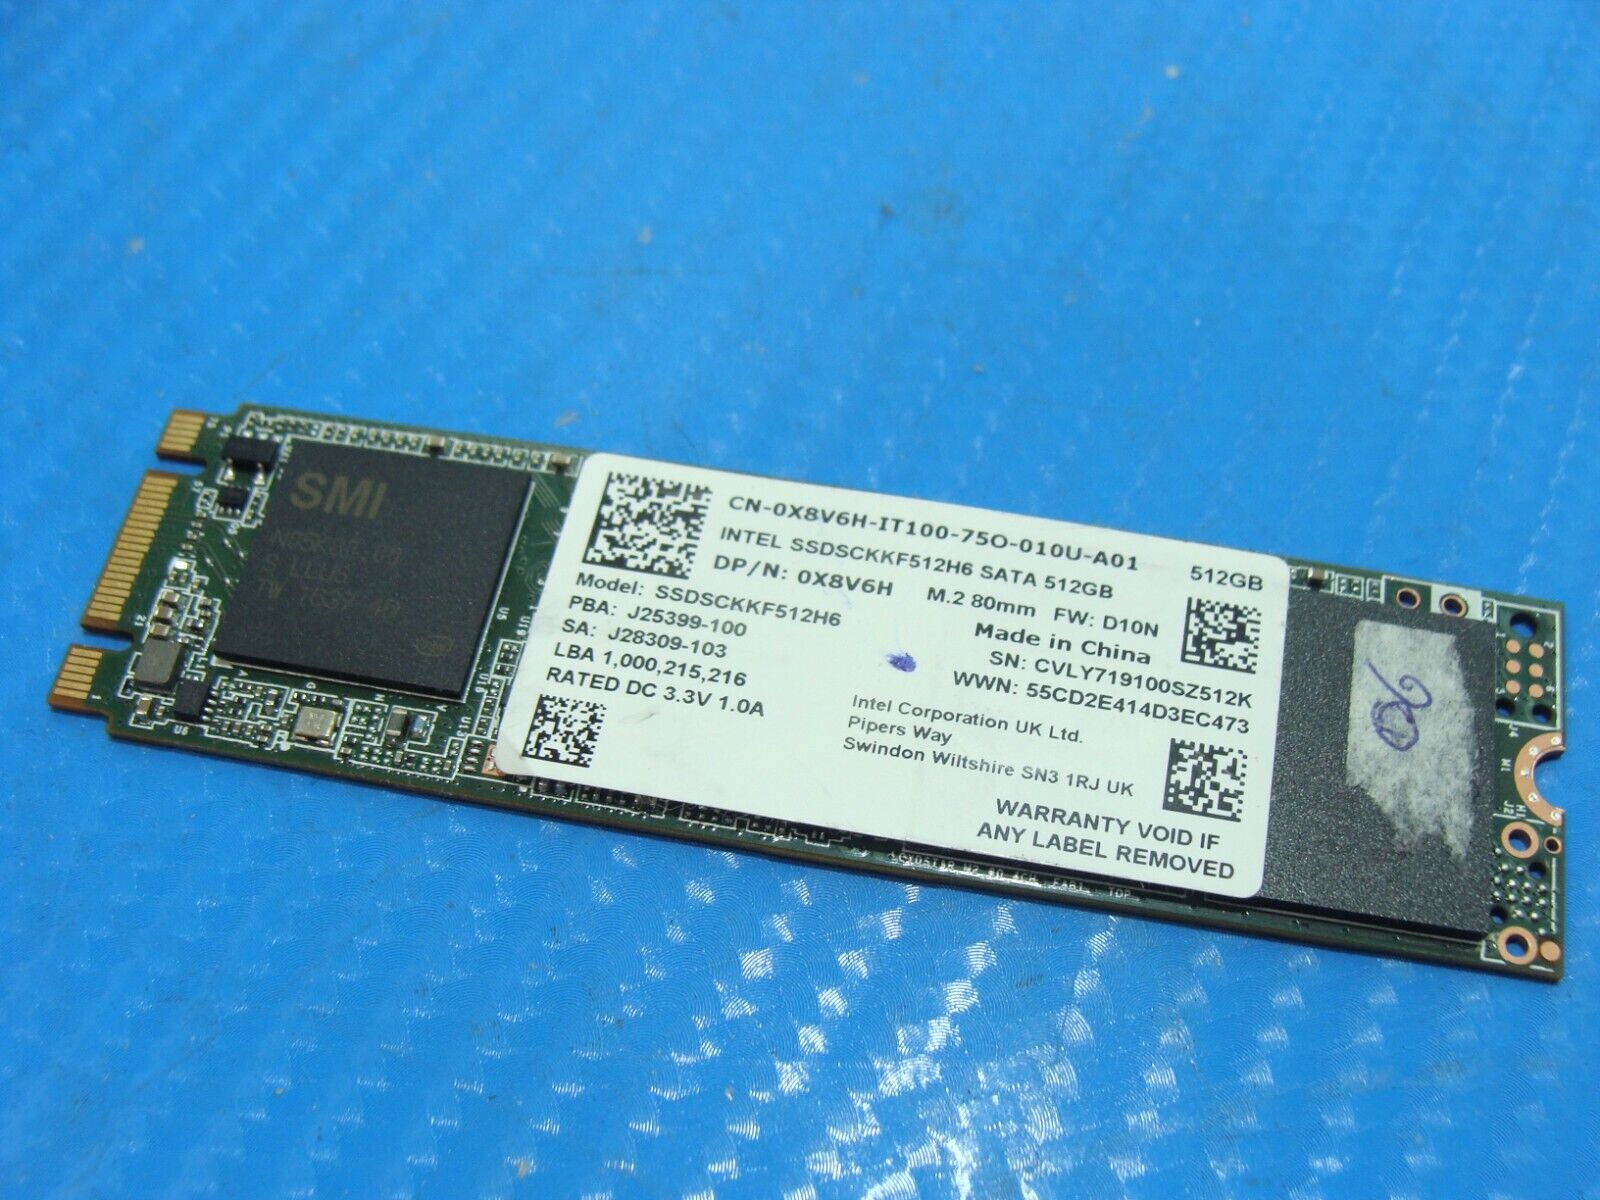 Dell 7480 Intel 512GB SATA M.2 SSD Solid State Drive X8V6H SSDSCKKF512H6